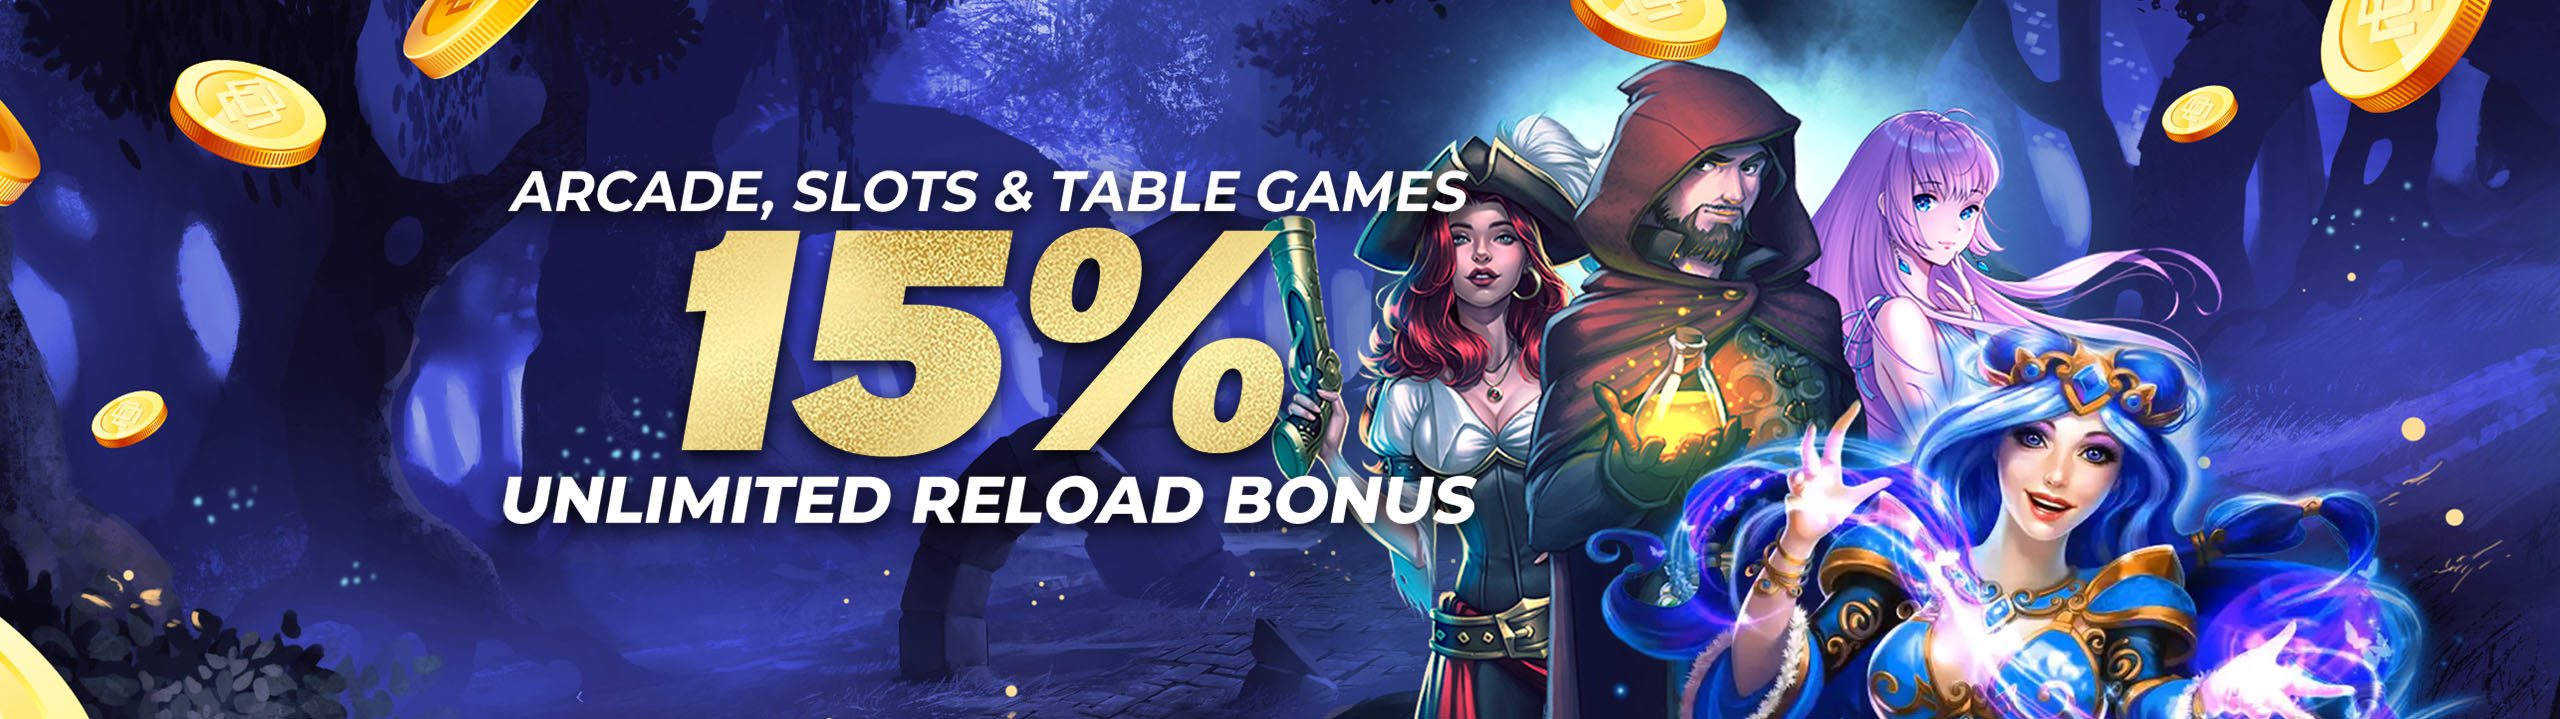 Arcade, Slots & Table Games 15% Unlimited Reload Bonus